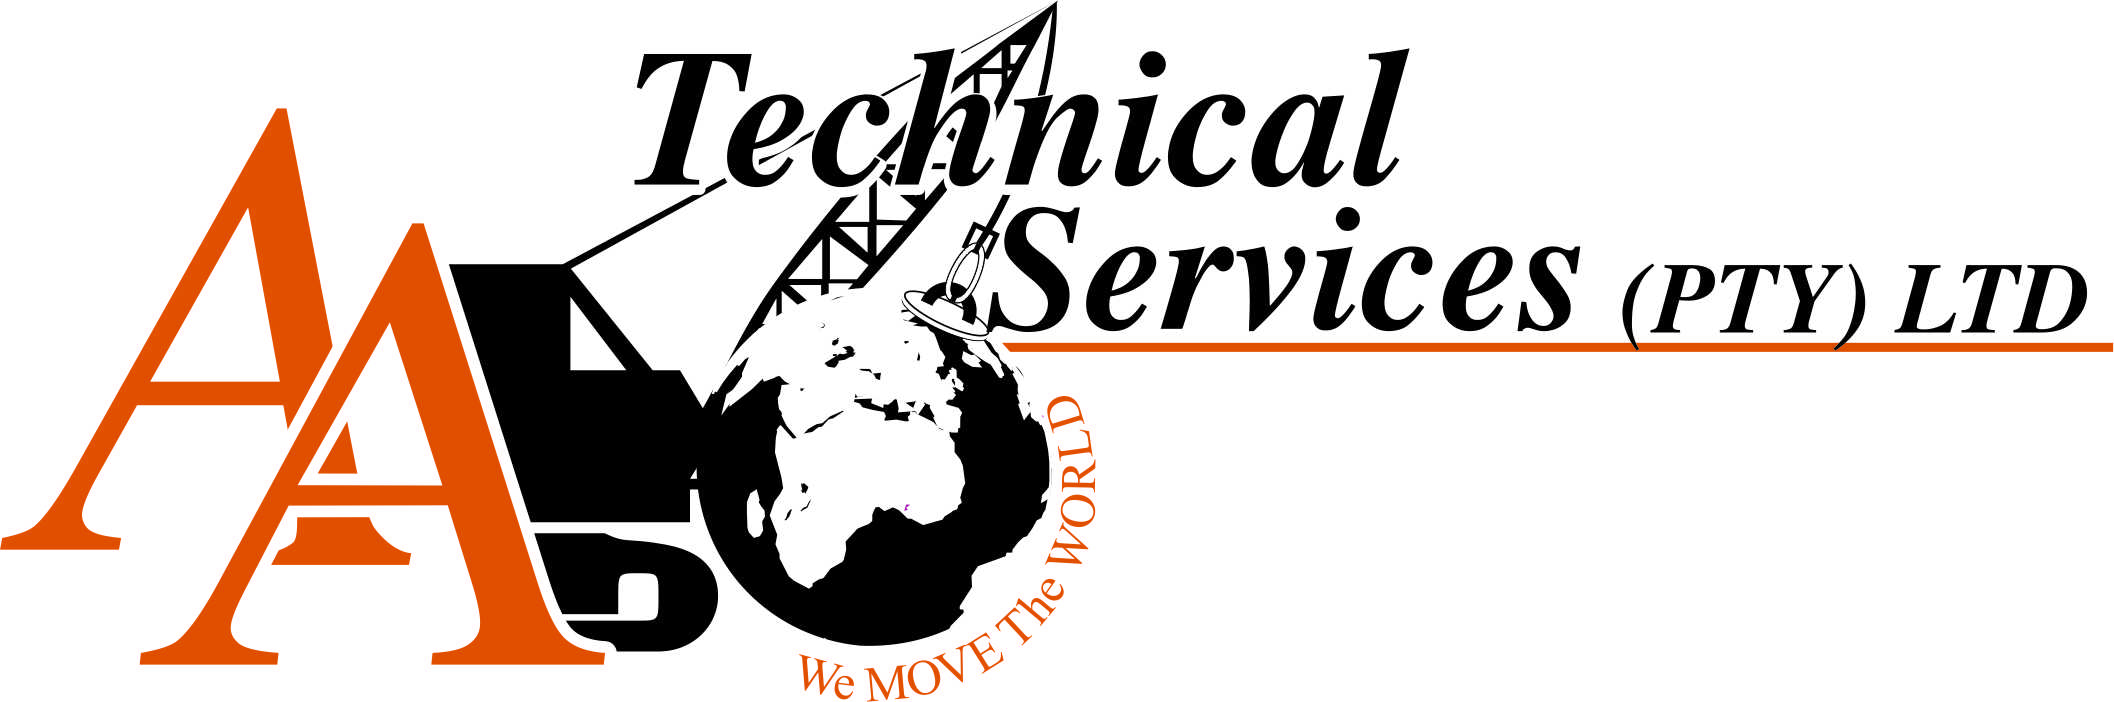 Aa Technical Services Cc logo